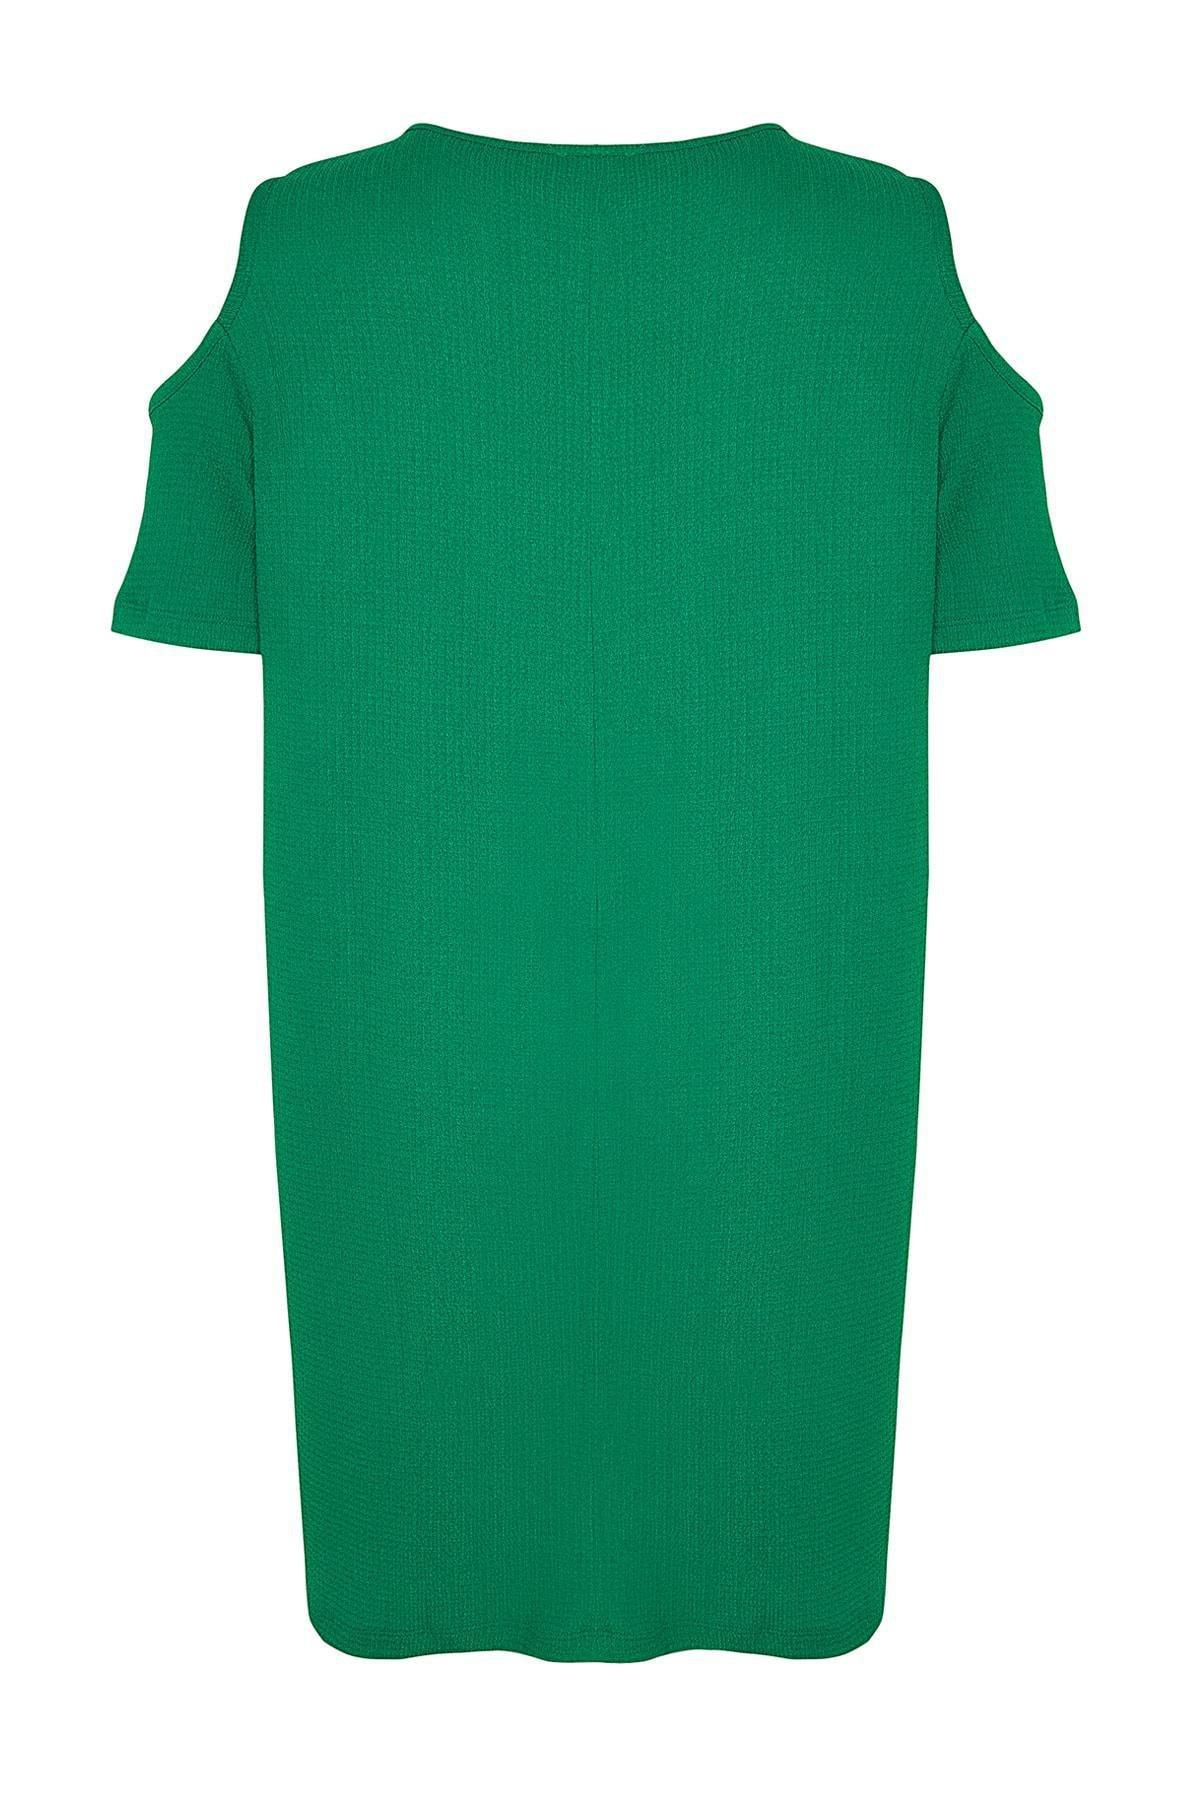 Trendyol - Green A-Line Plus Size Dress